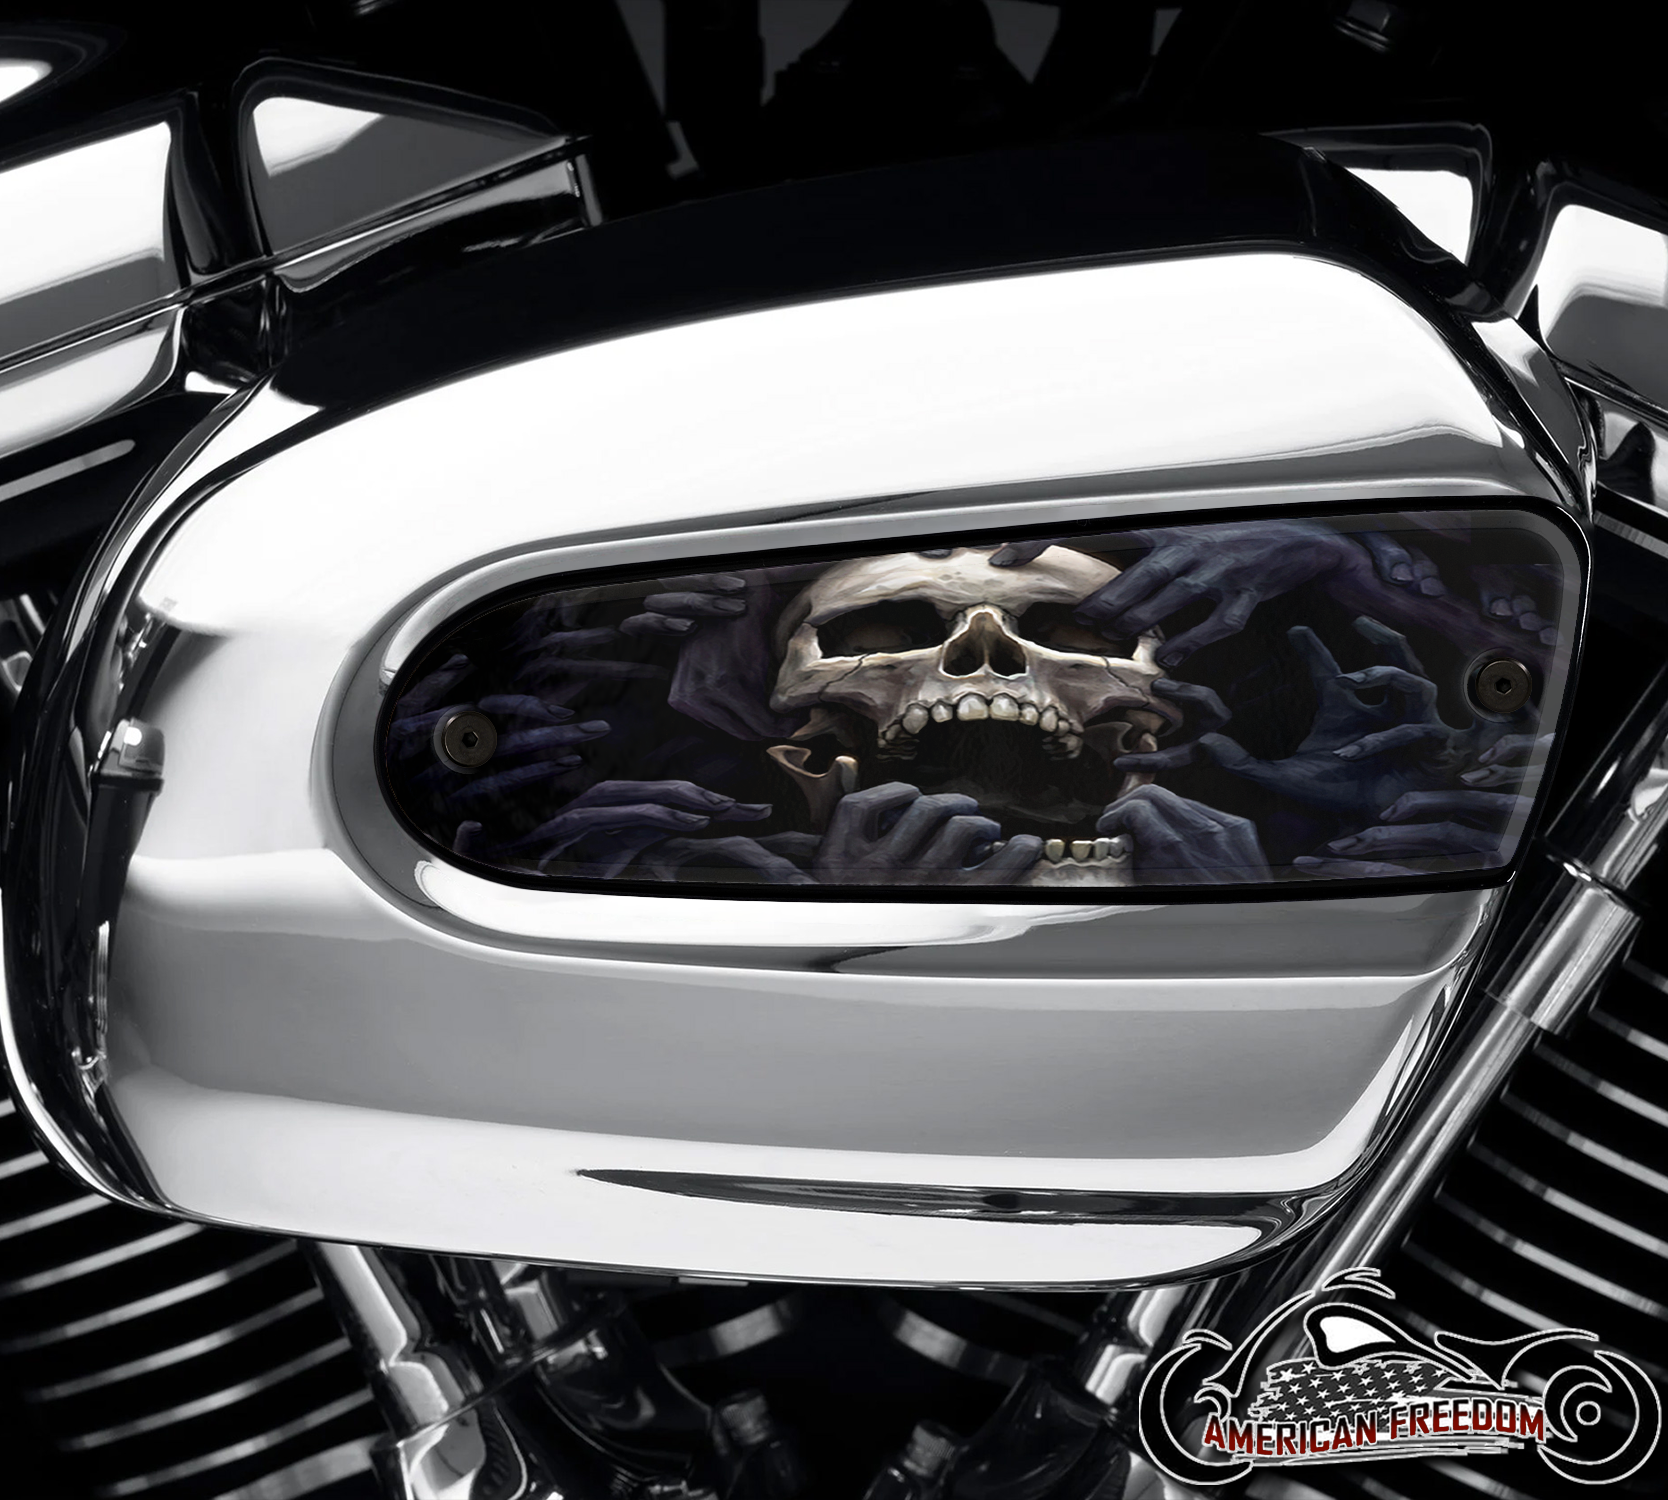 Harley Davidson Wedge Air Cleaner Insert - Torn Apart Skull